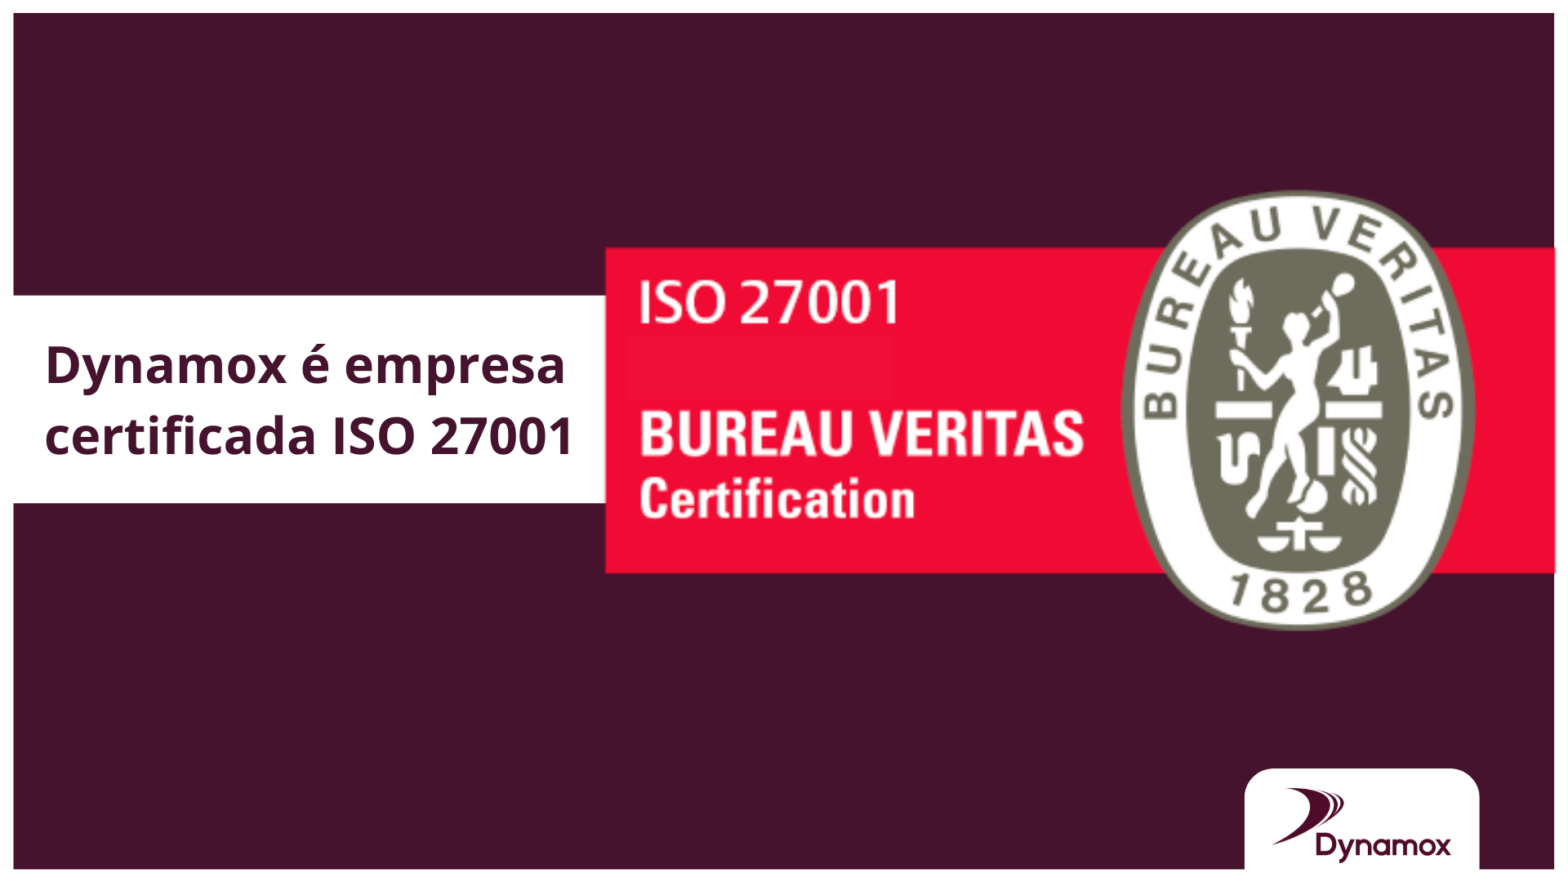 Dynamox é empresa certificada ISO 27001